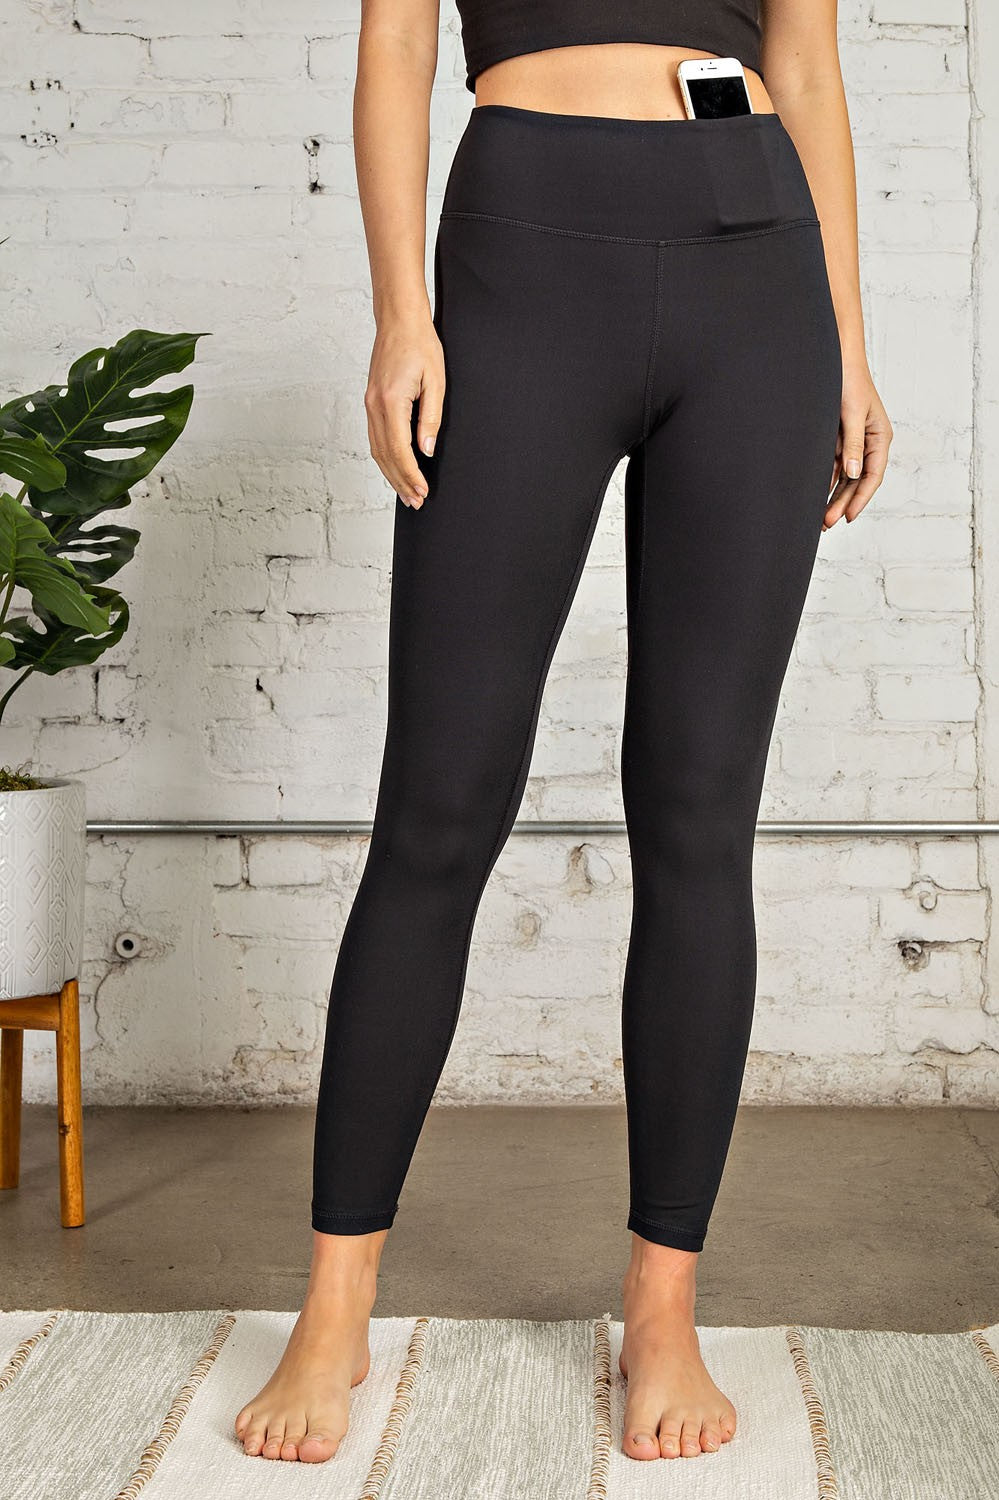 butter soft high waist leggings – Brooke Rose Designs